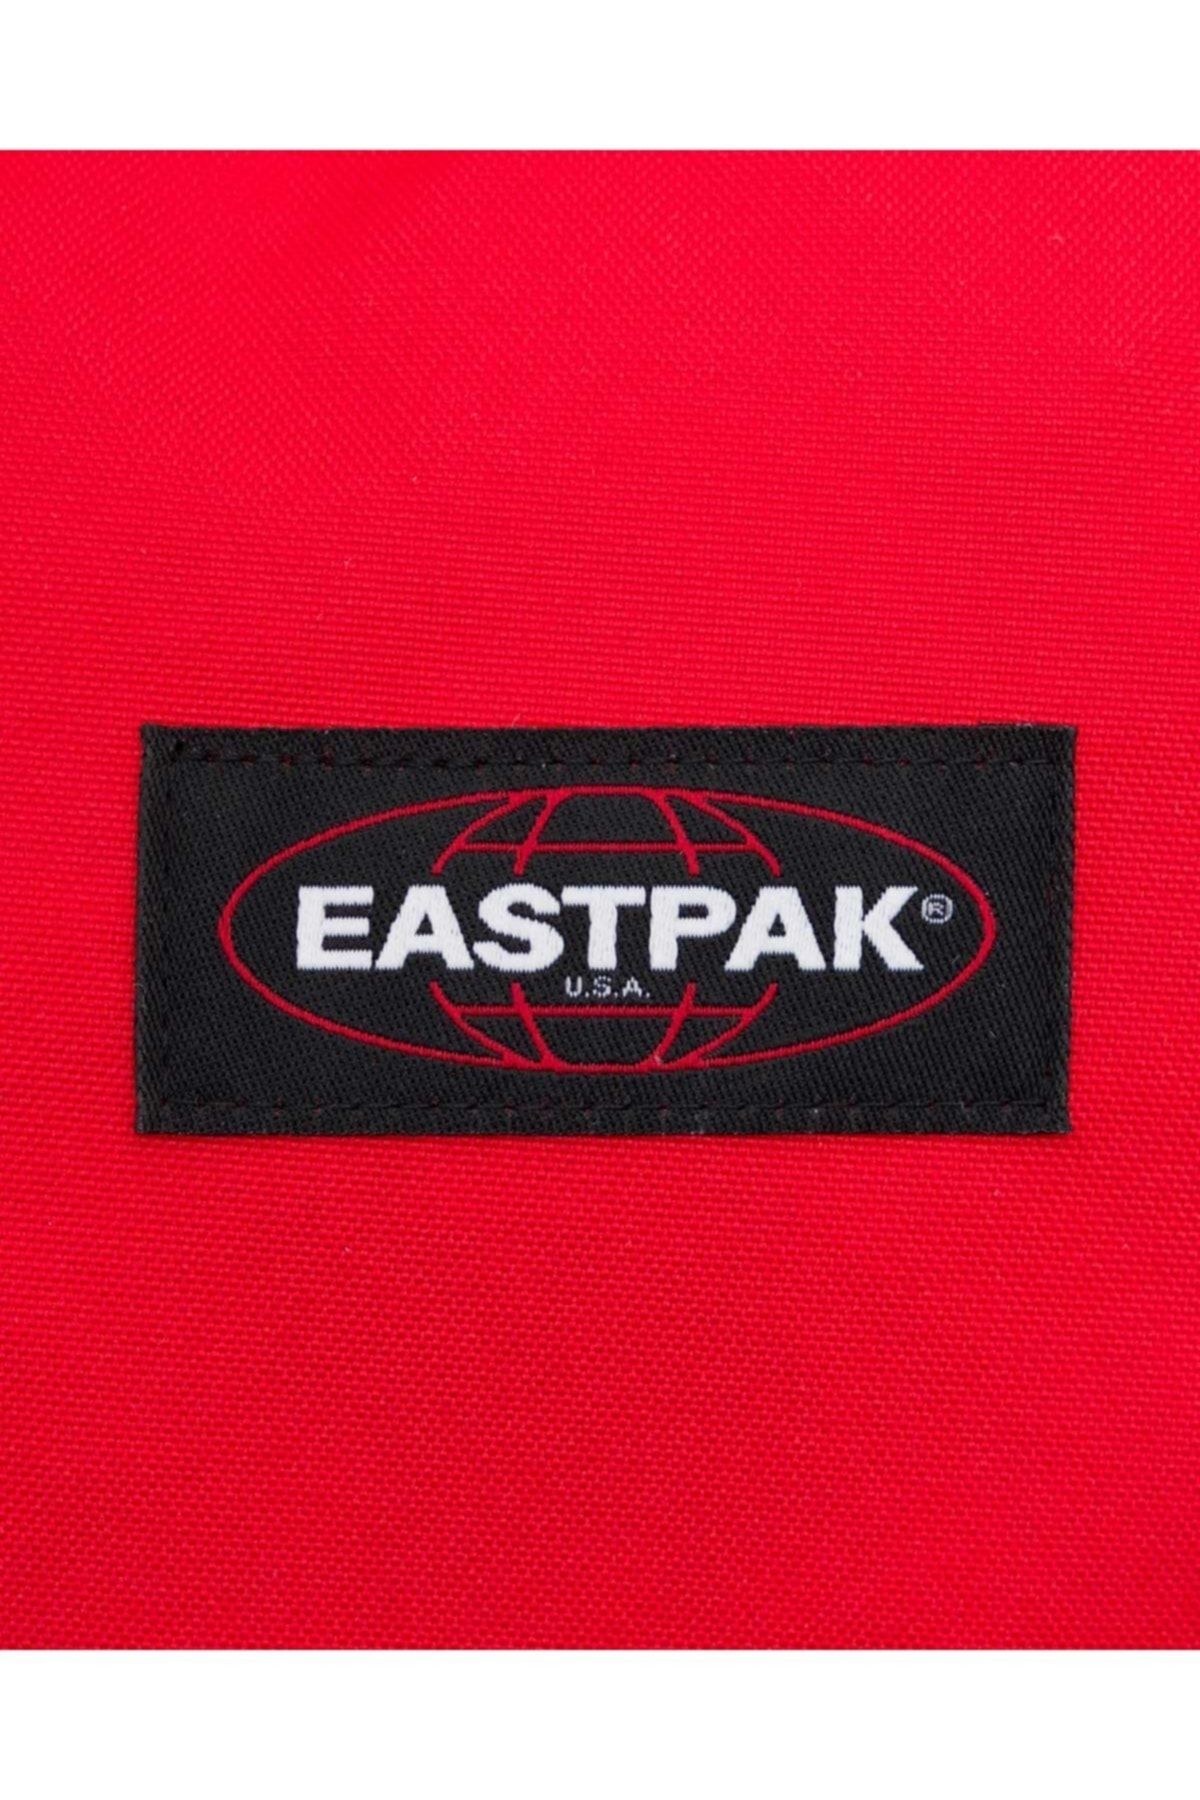 Eastpak Unisex Finnian Sırt Çantası Ek0a5b7d